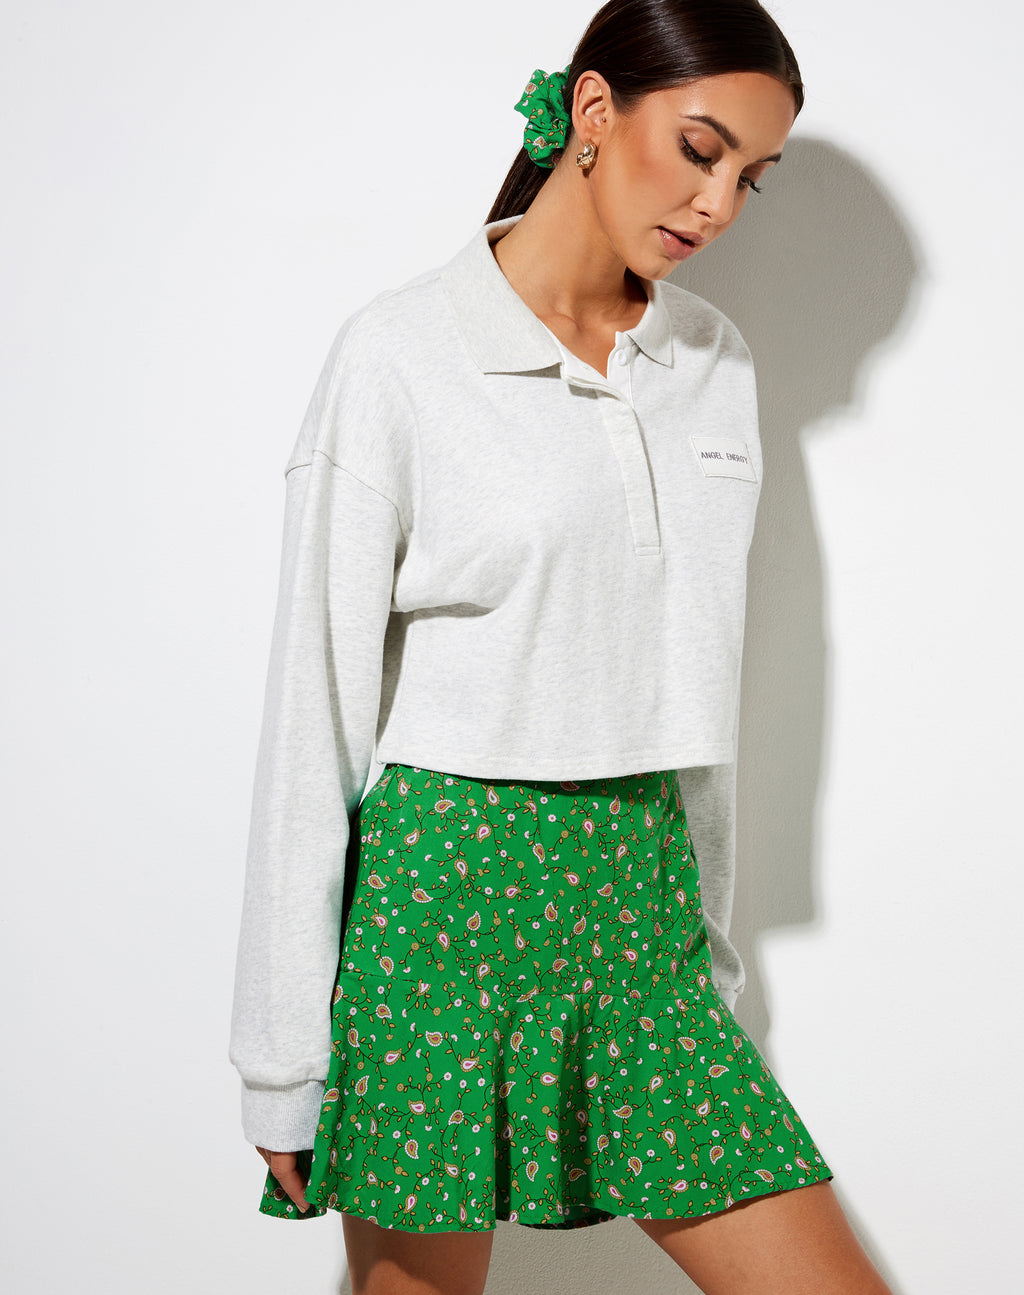 Gaelle Mini Skirt in Paisley Fun Green